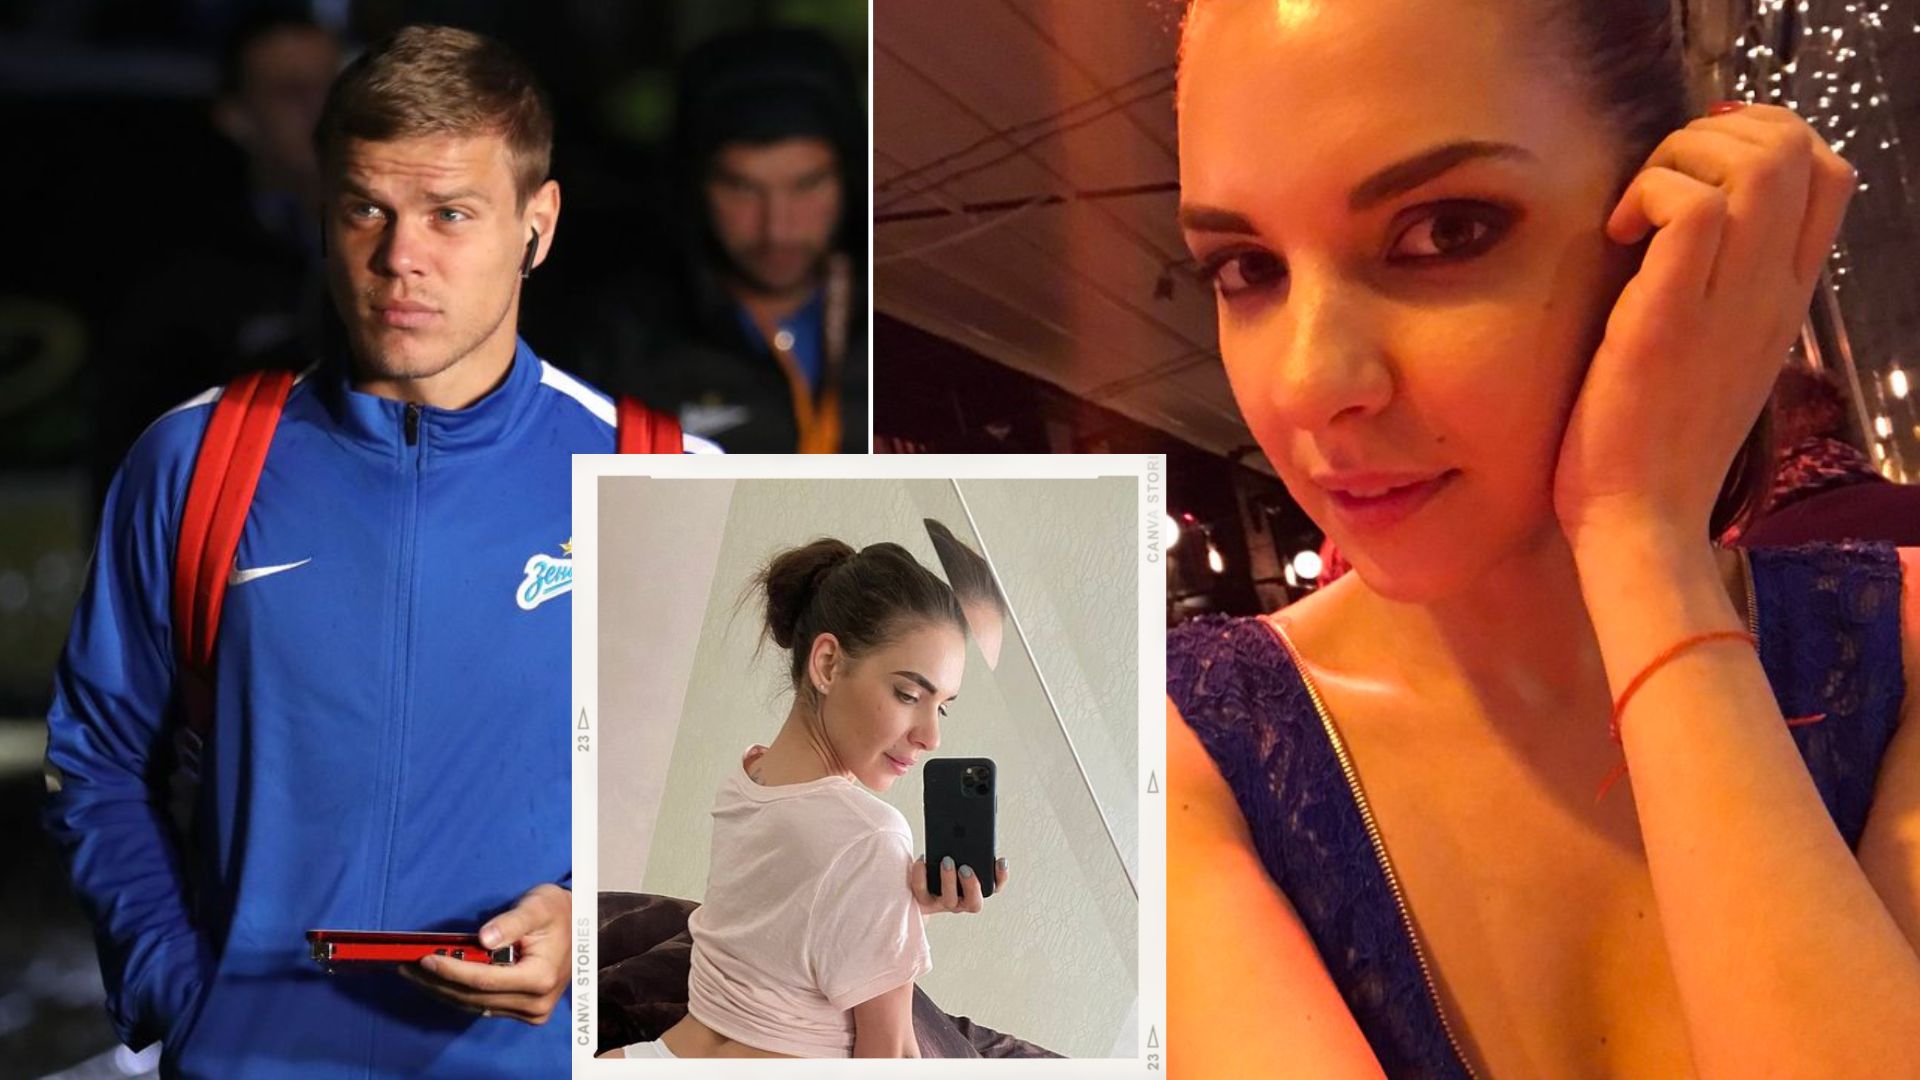 Porn star offered Russian international 16-hour sex marathon if he scored 5 goals CaughtOffside photo